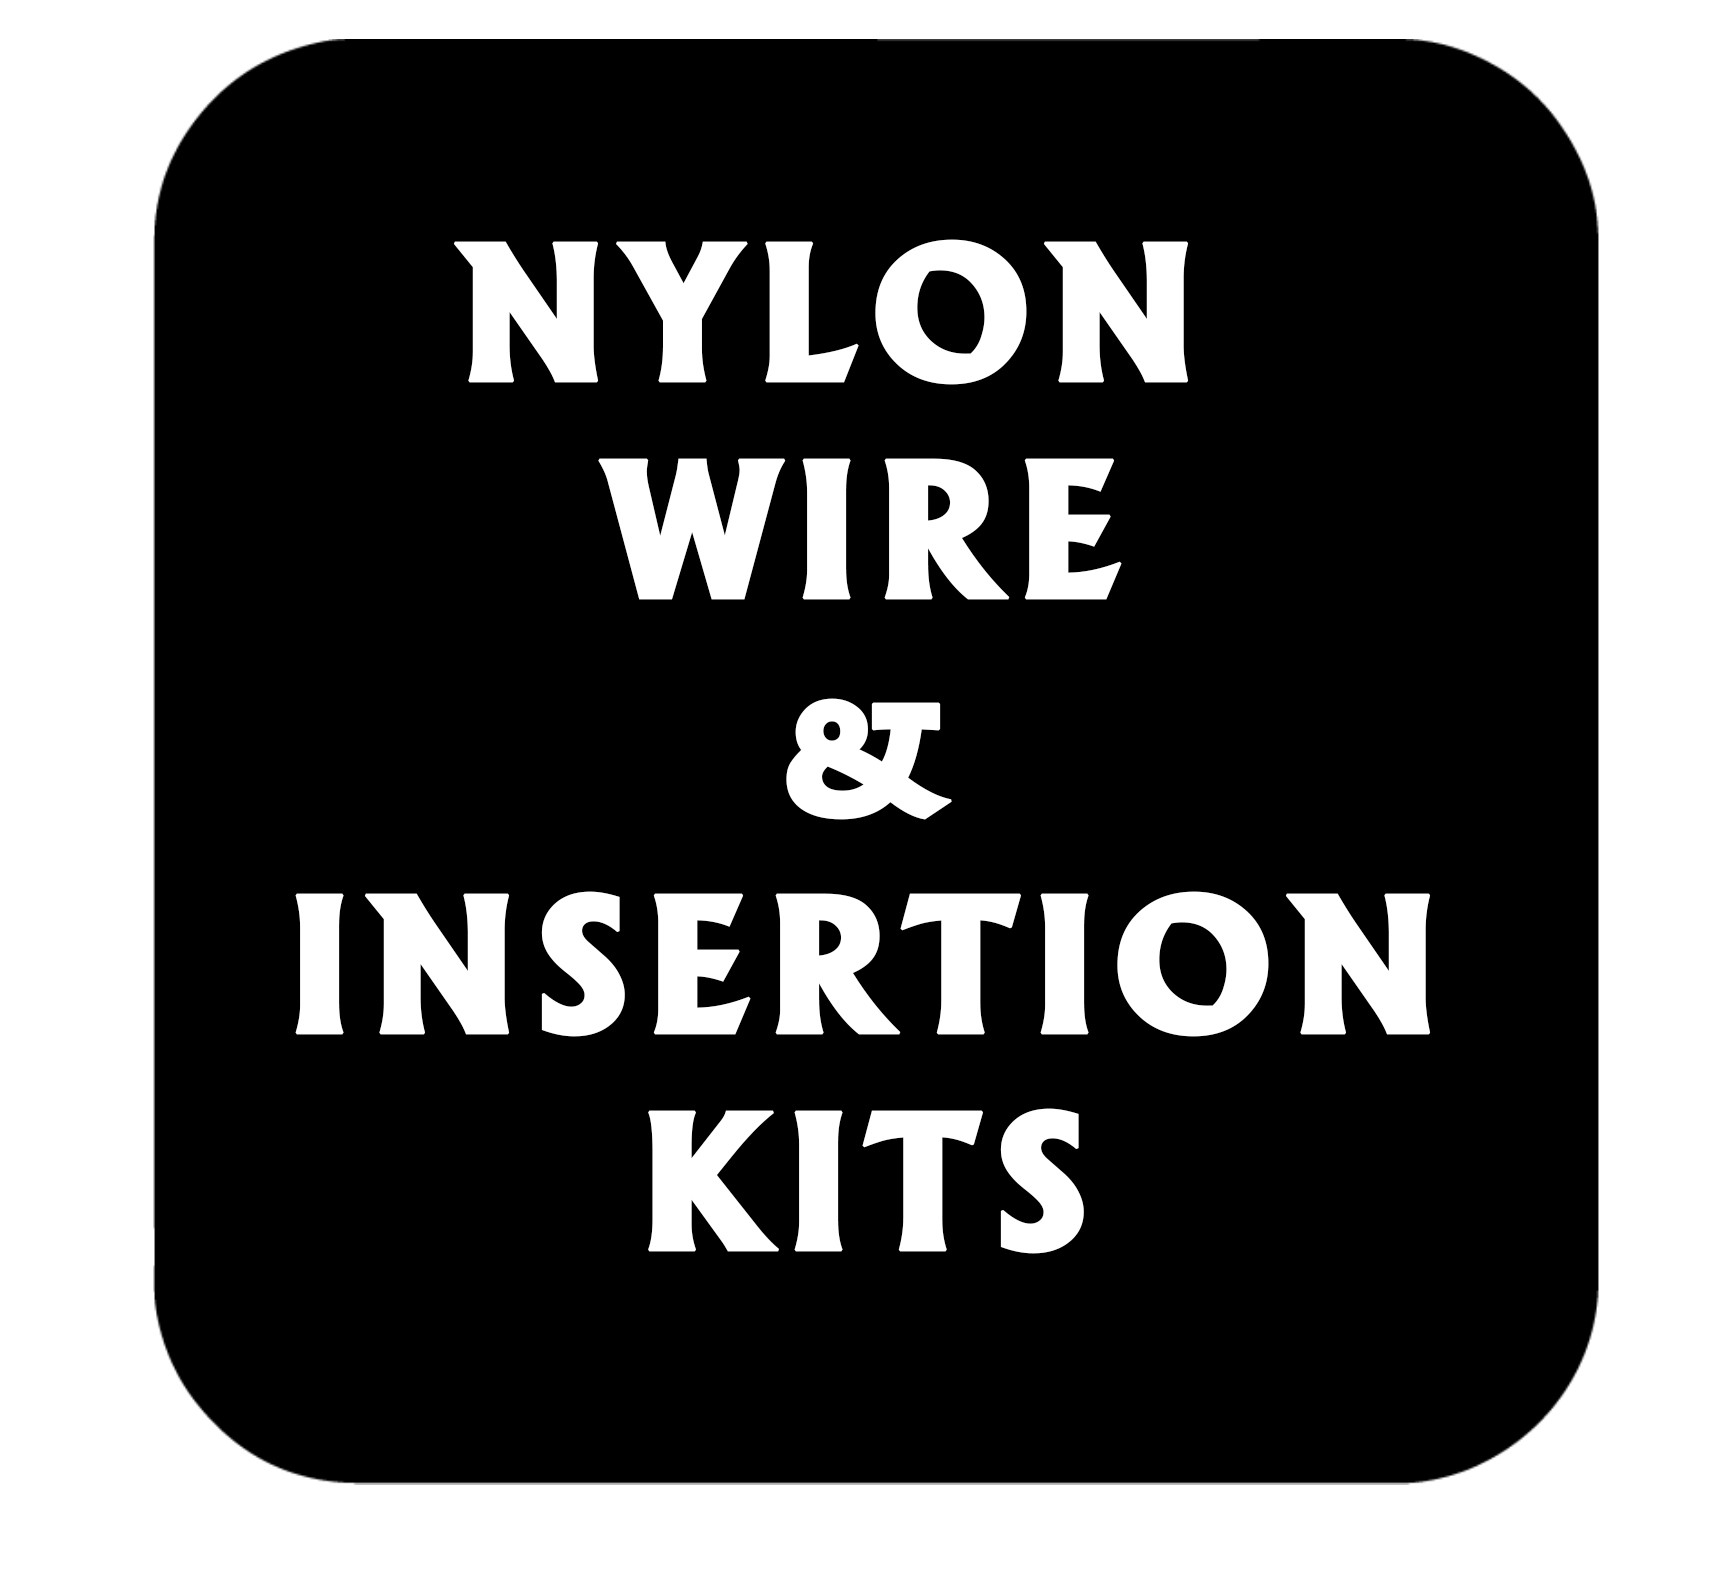 NYLON WIRE & LENS INSERTION